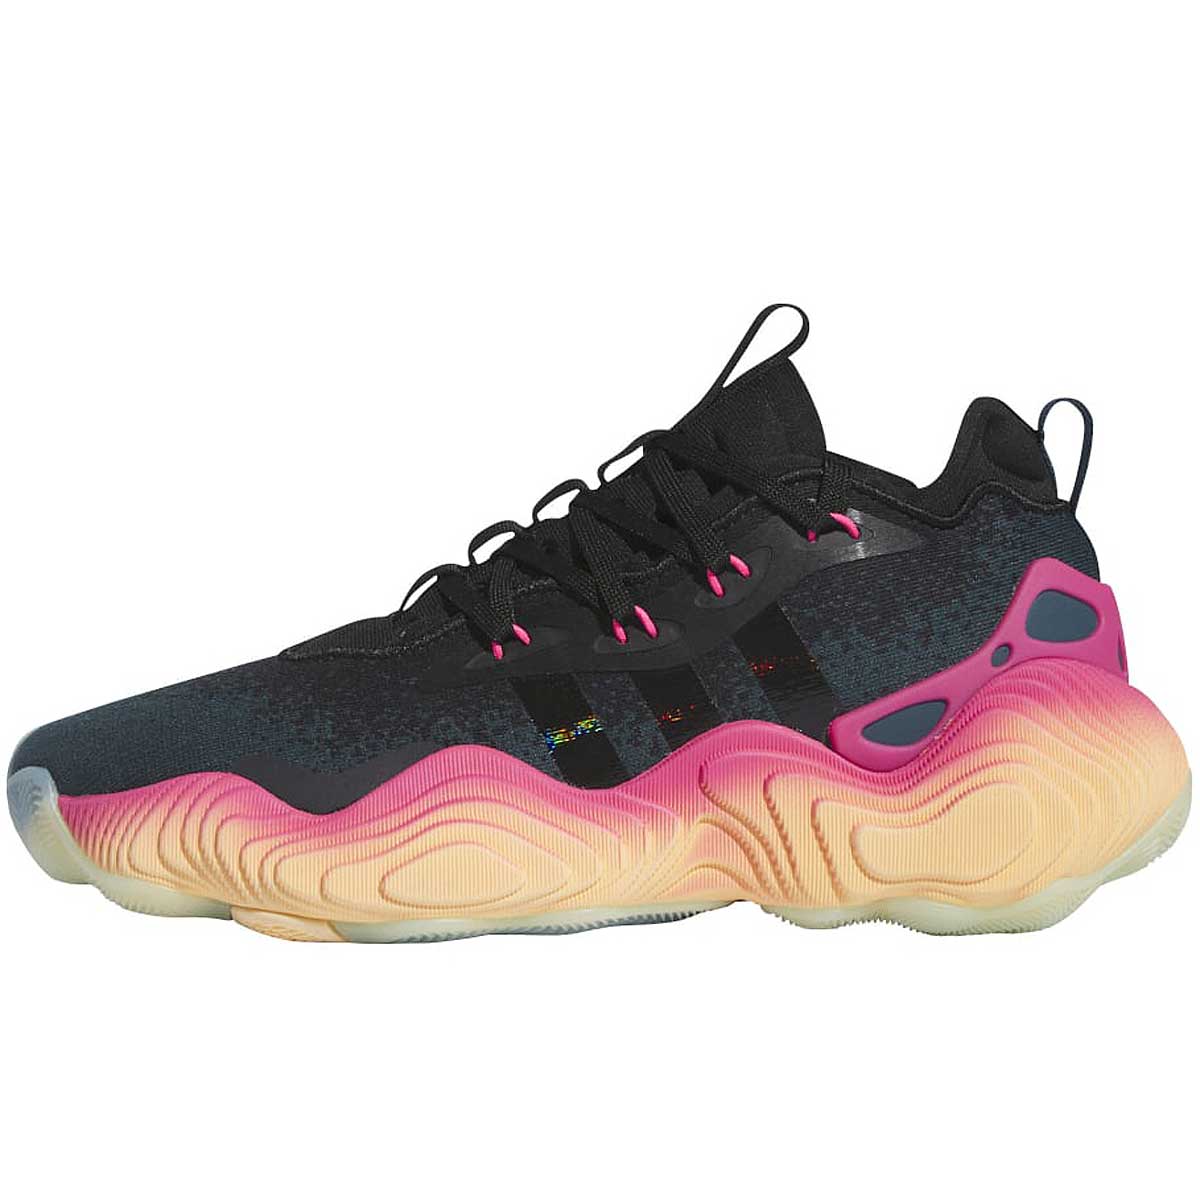 adidas Trae Young 3 Basketball Shoes - Beige, Unisex Basketball